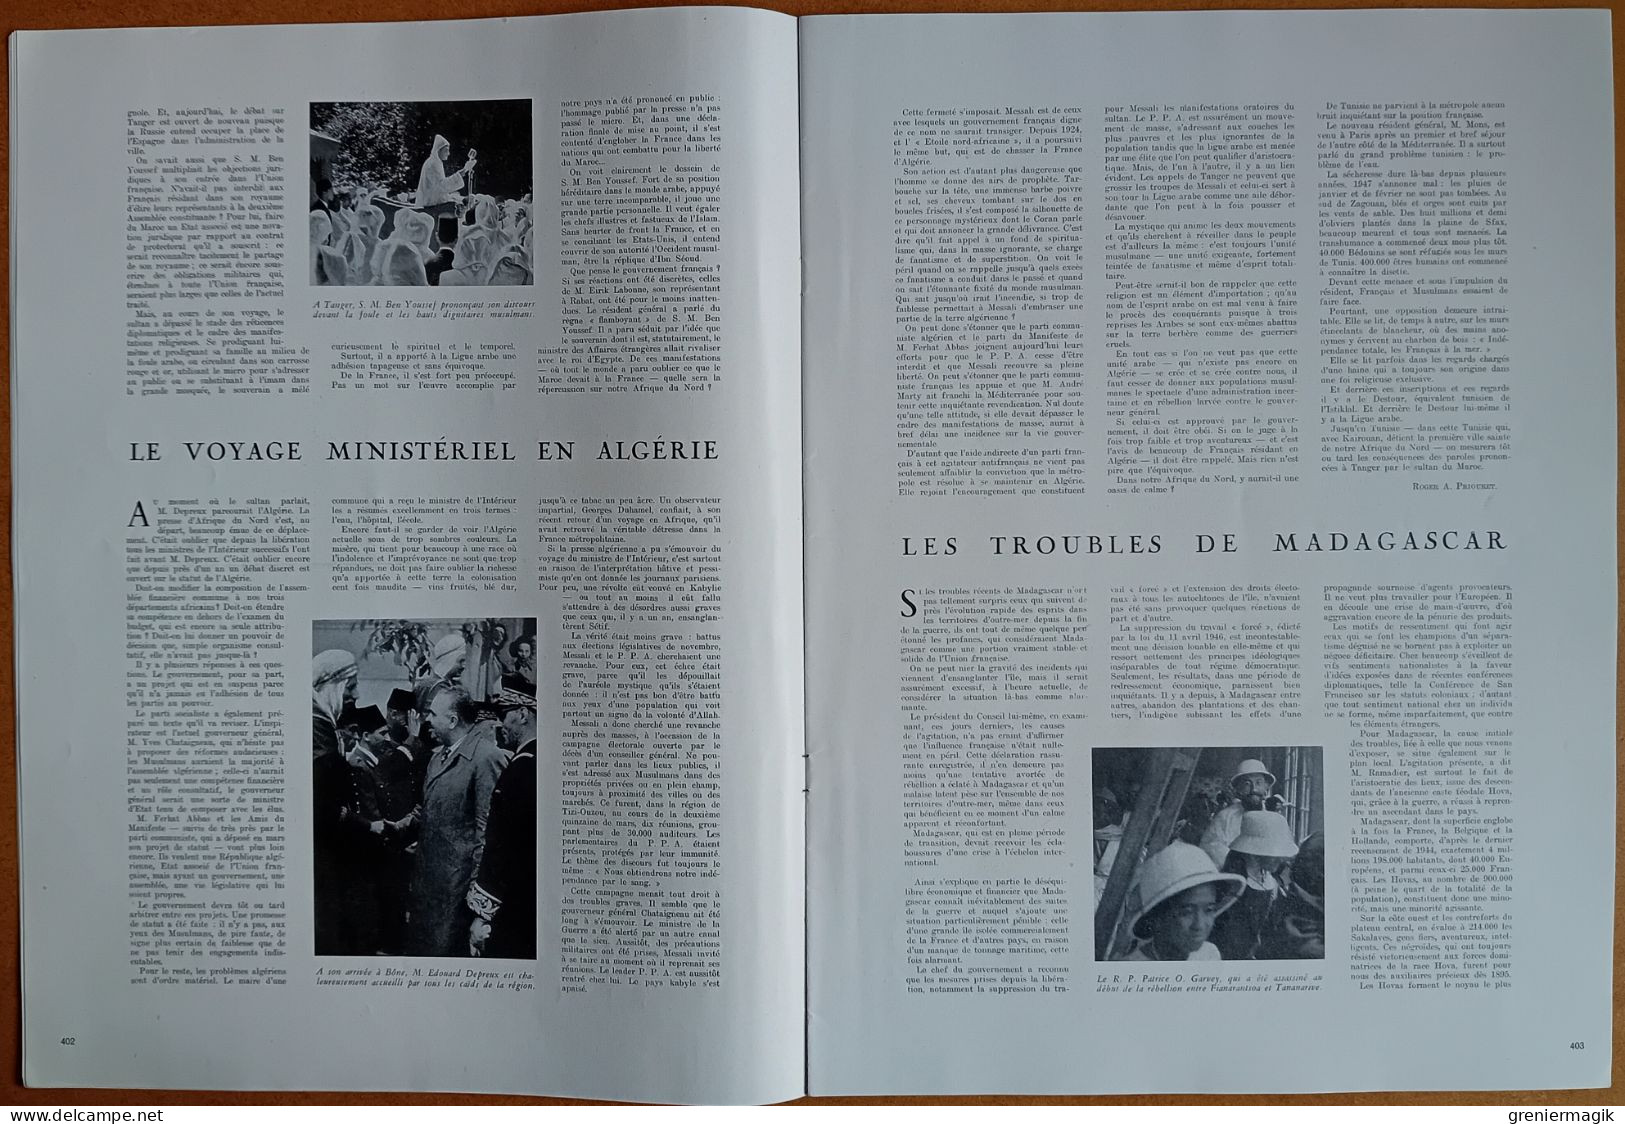 France Illustration N°82 26/04/1947 Port De Texas-City/Discours De Tanger/Indochine/Royal Tour/Maîtres Espagnols Londres - Informaciones Generales